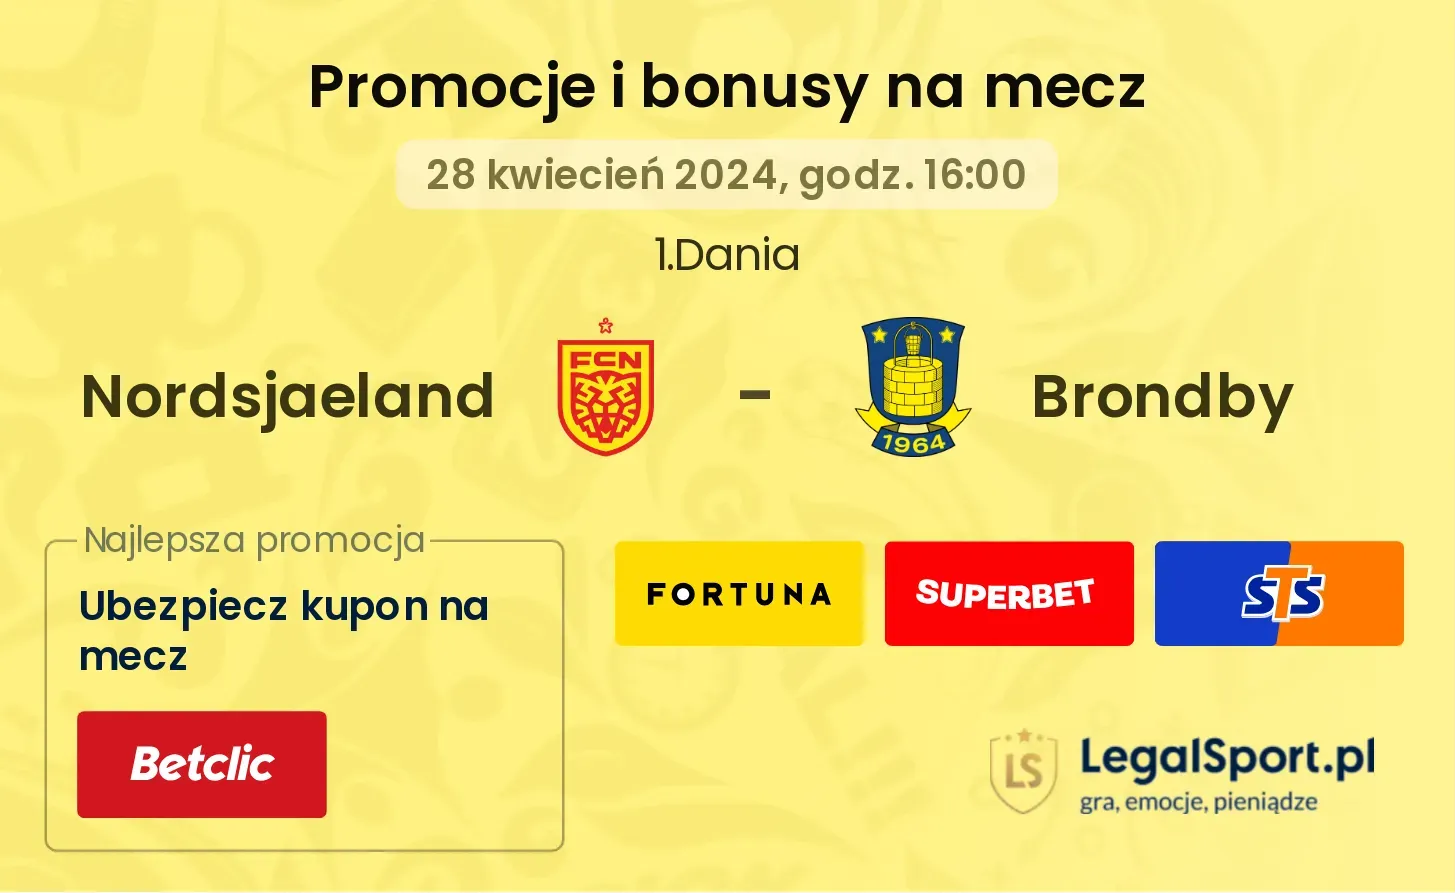 Nordsjaeland - Brondby promocje bonusy na mecz